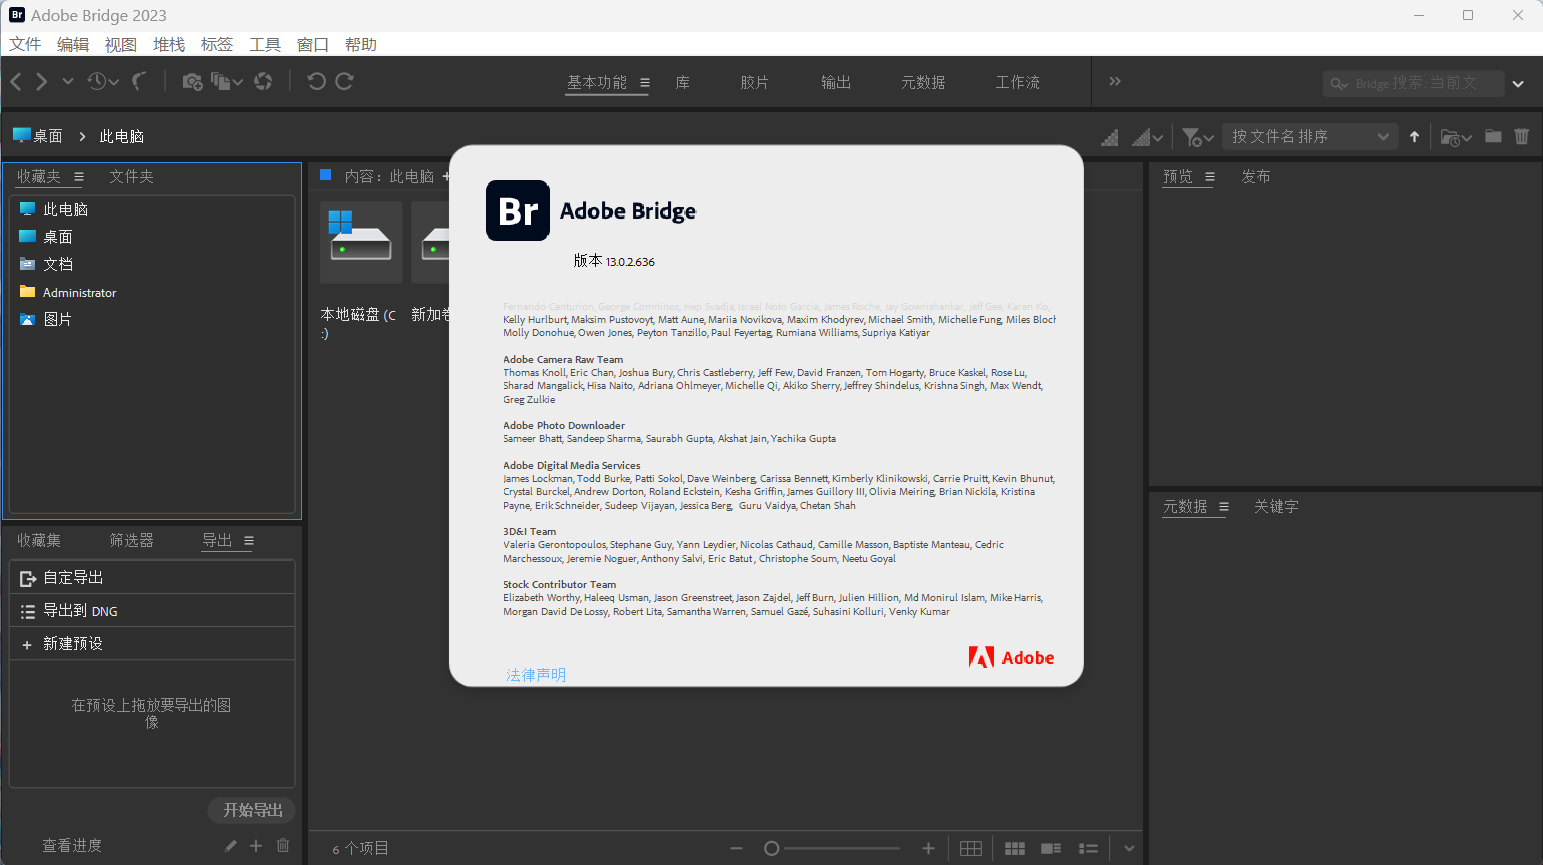 Adobe Bridge 2023 v13.0.4.755 for windows download